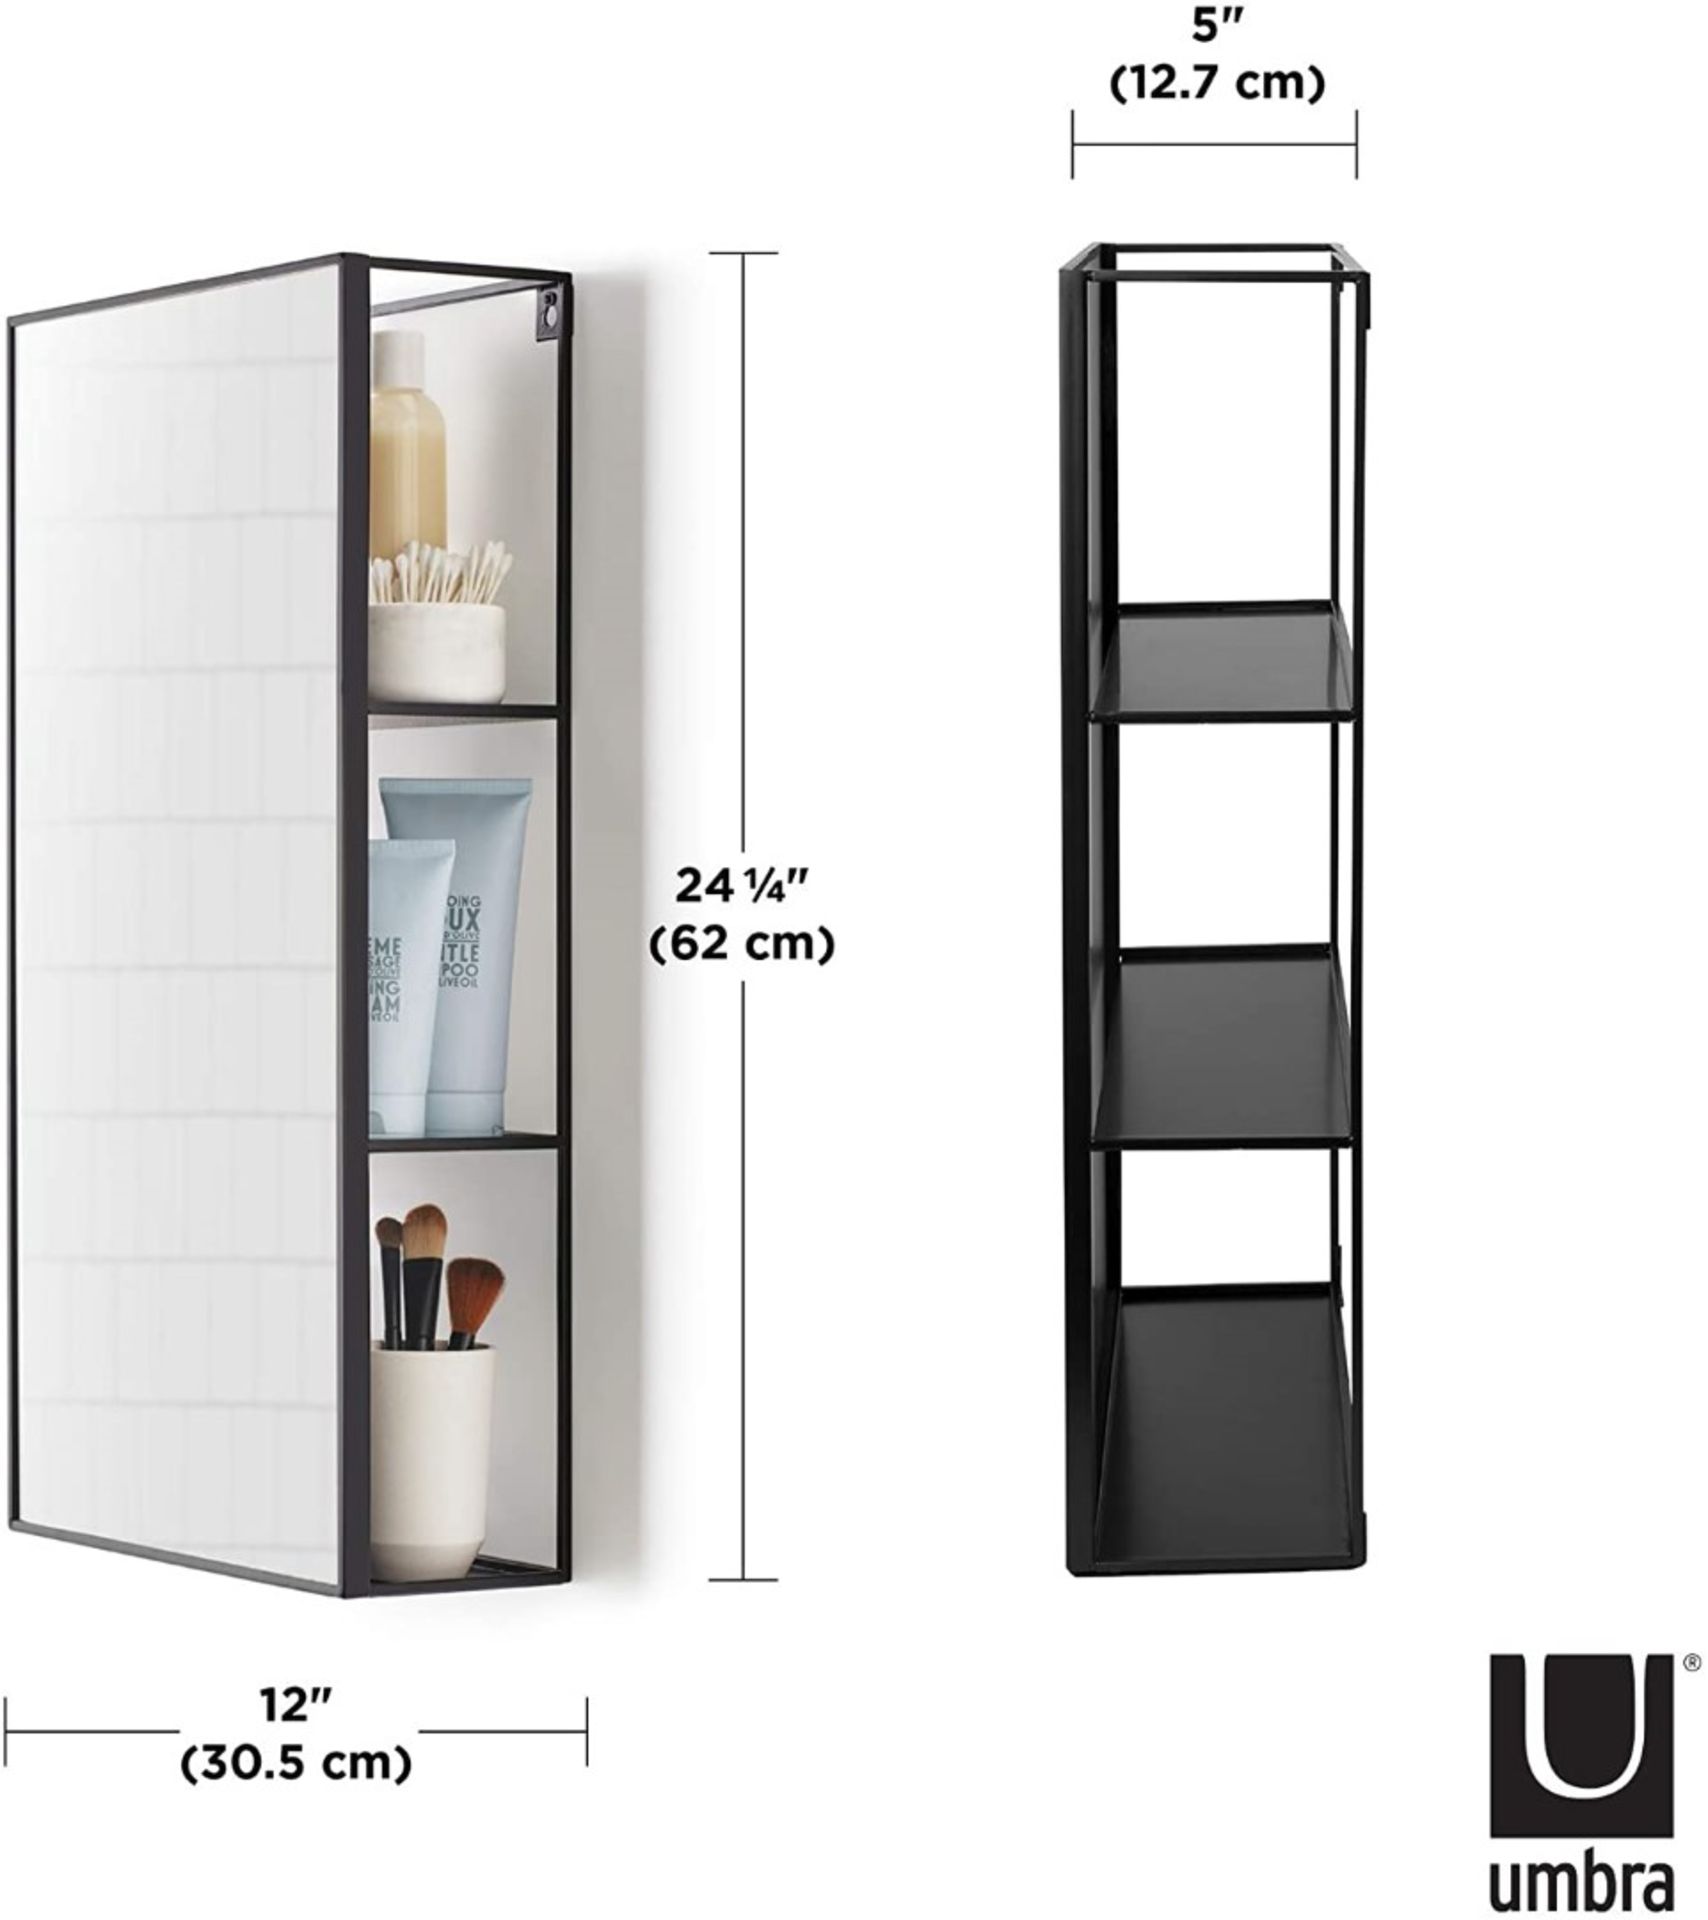 1 x Umbra 'CUBIKO' Sleek Modern Mirrored Medicine Cabinet With A Black Metal Frame - Dimensions: - Image 5 of 8